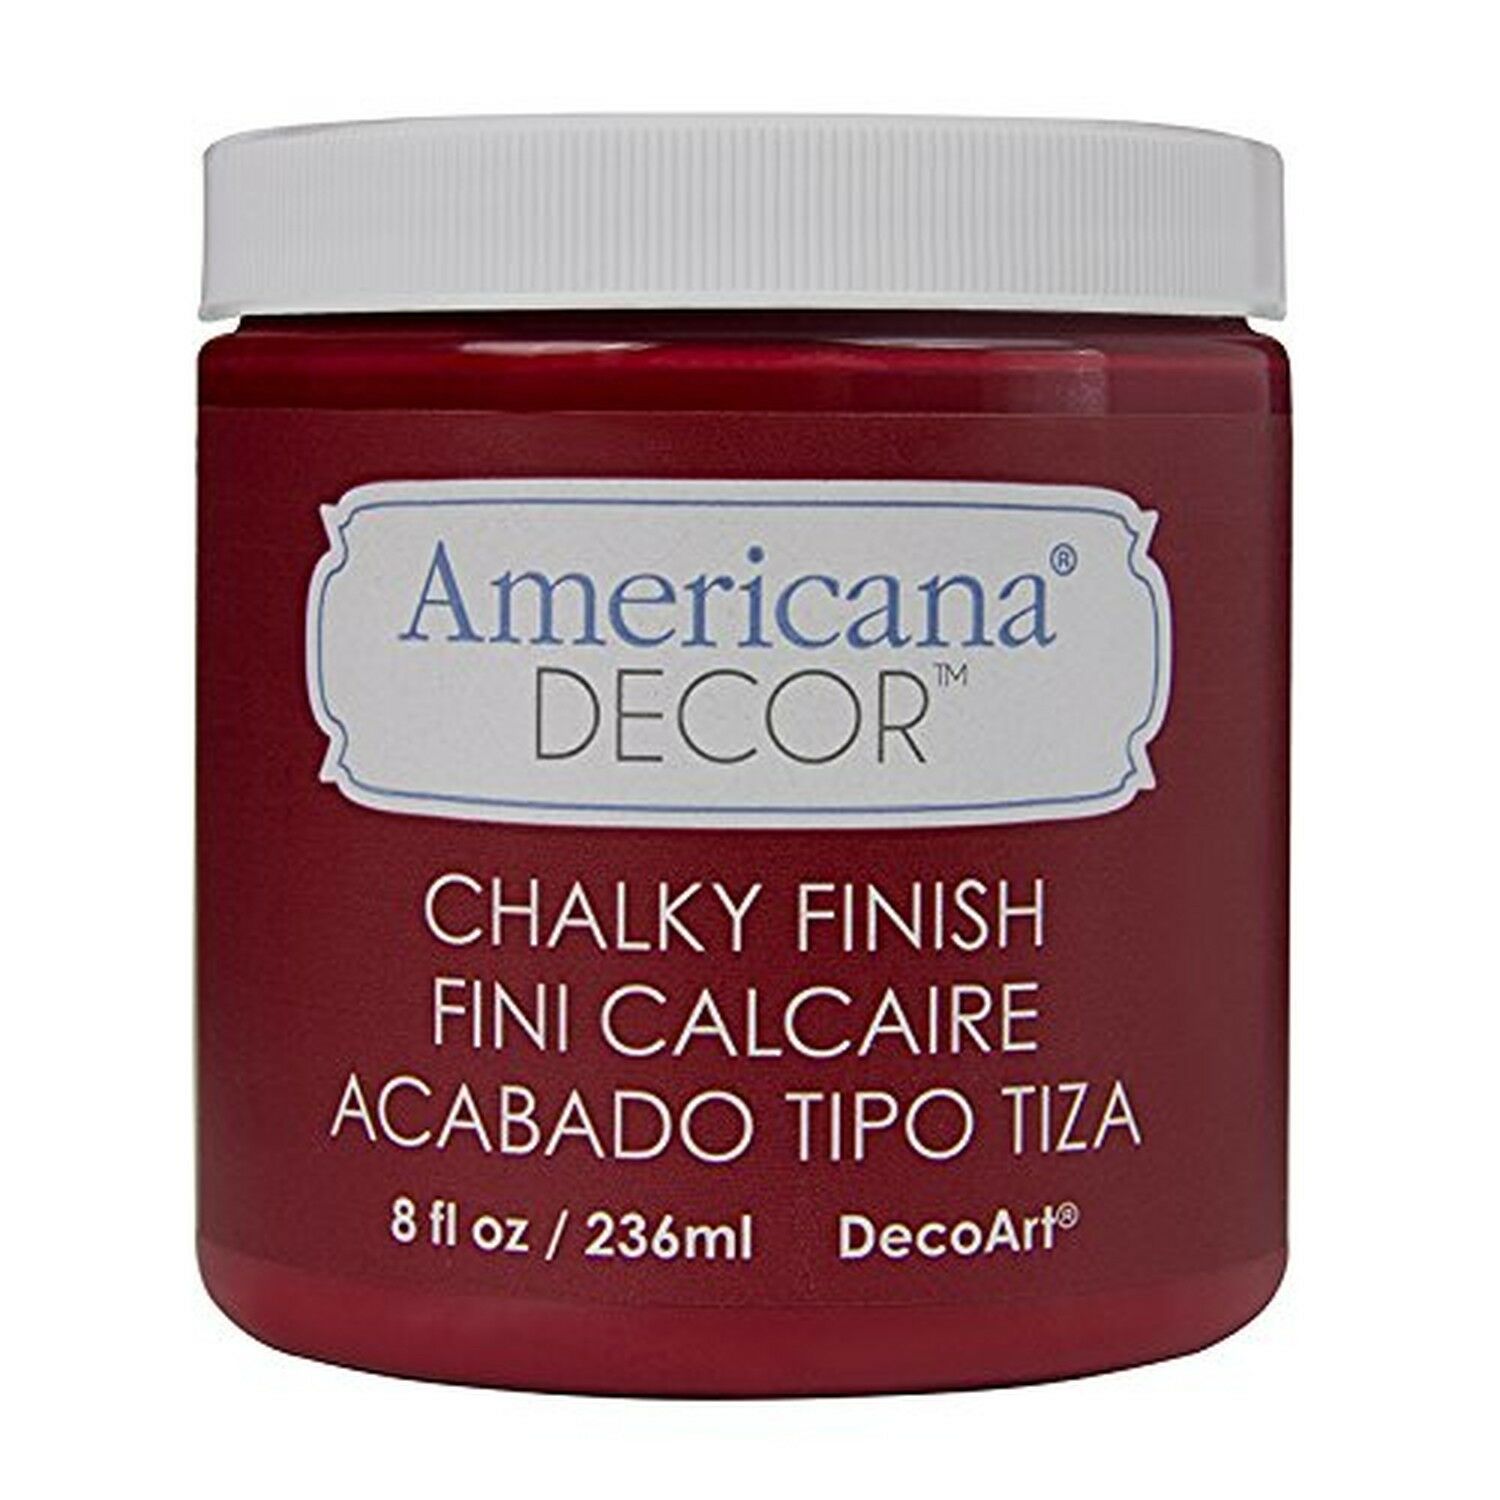 DecoArt Americana Decor Chalky Finish Paint - Rouge 